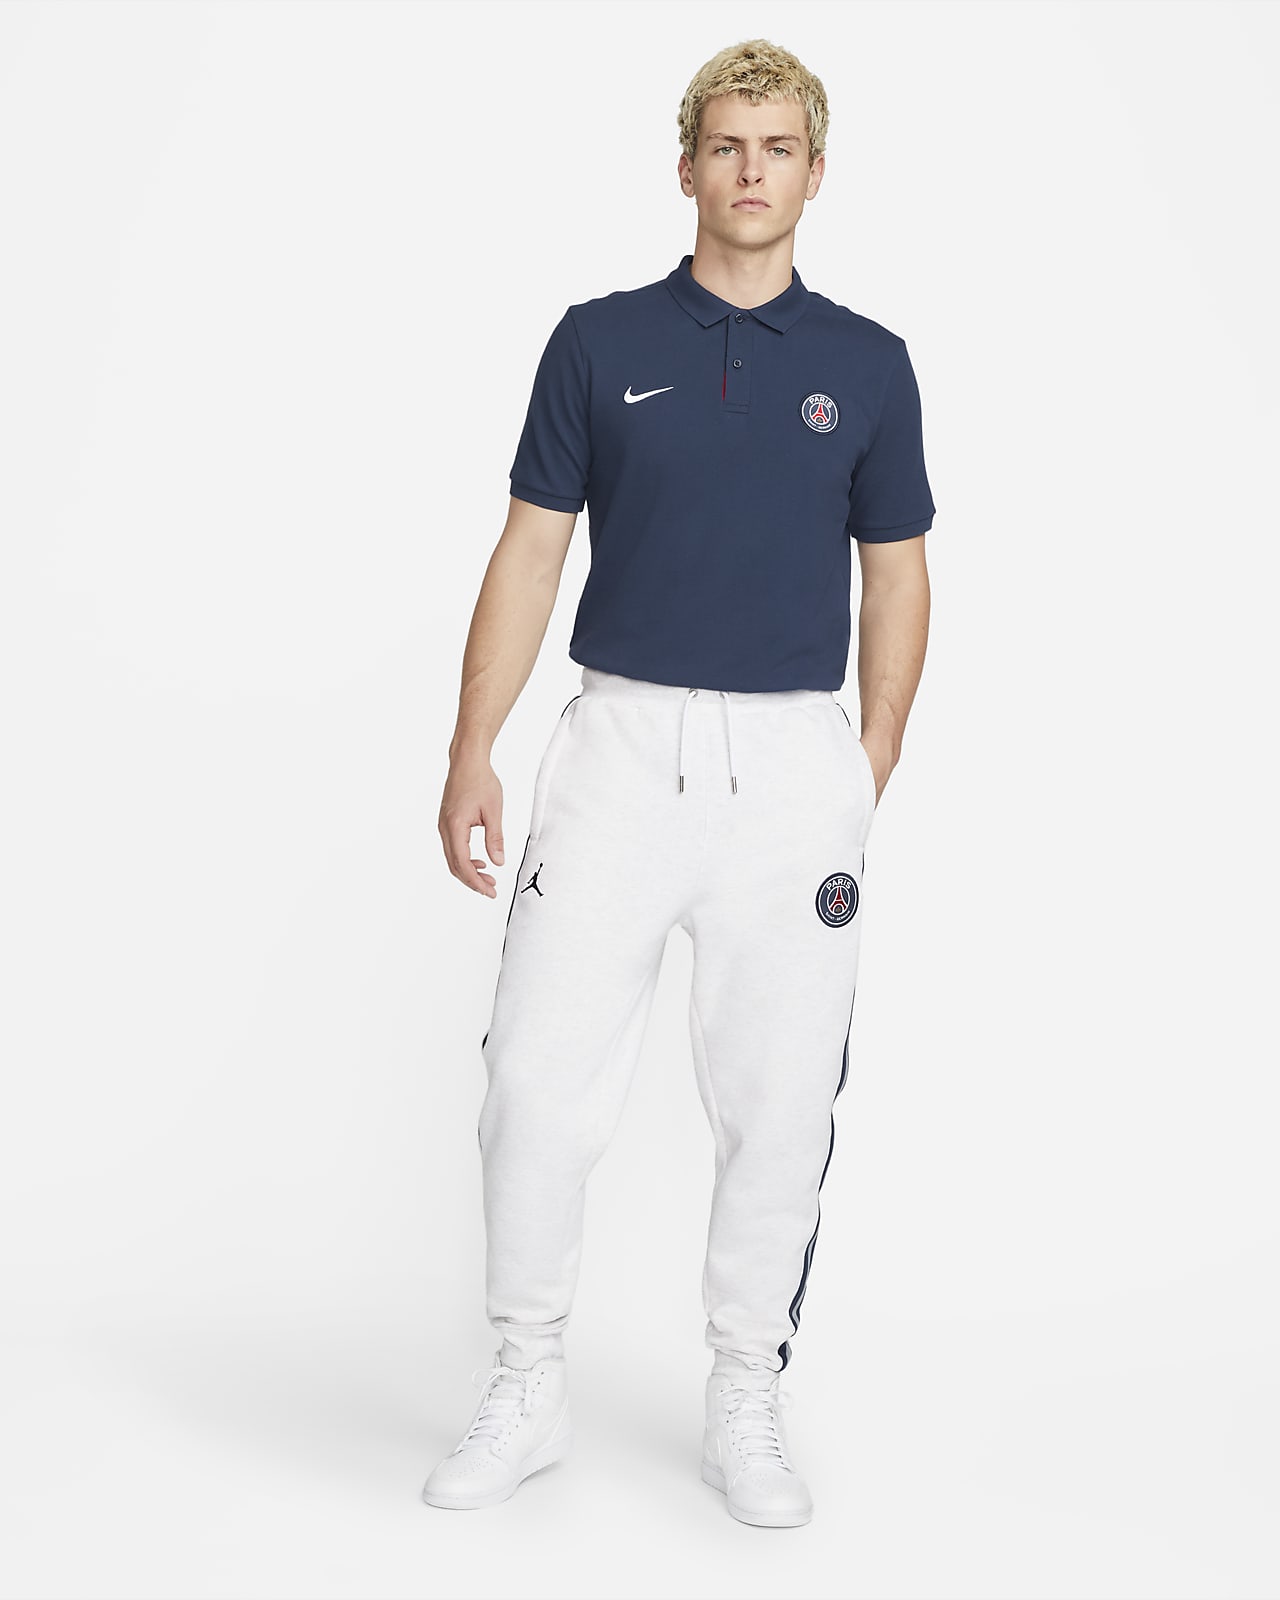 Te Regelmatig Gematigd Paris Saint-Germain Men's Polo. Nike.com